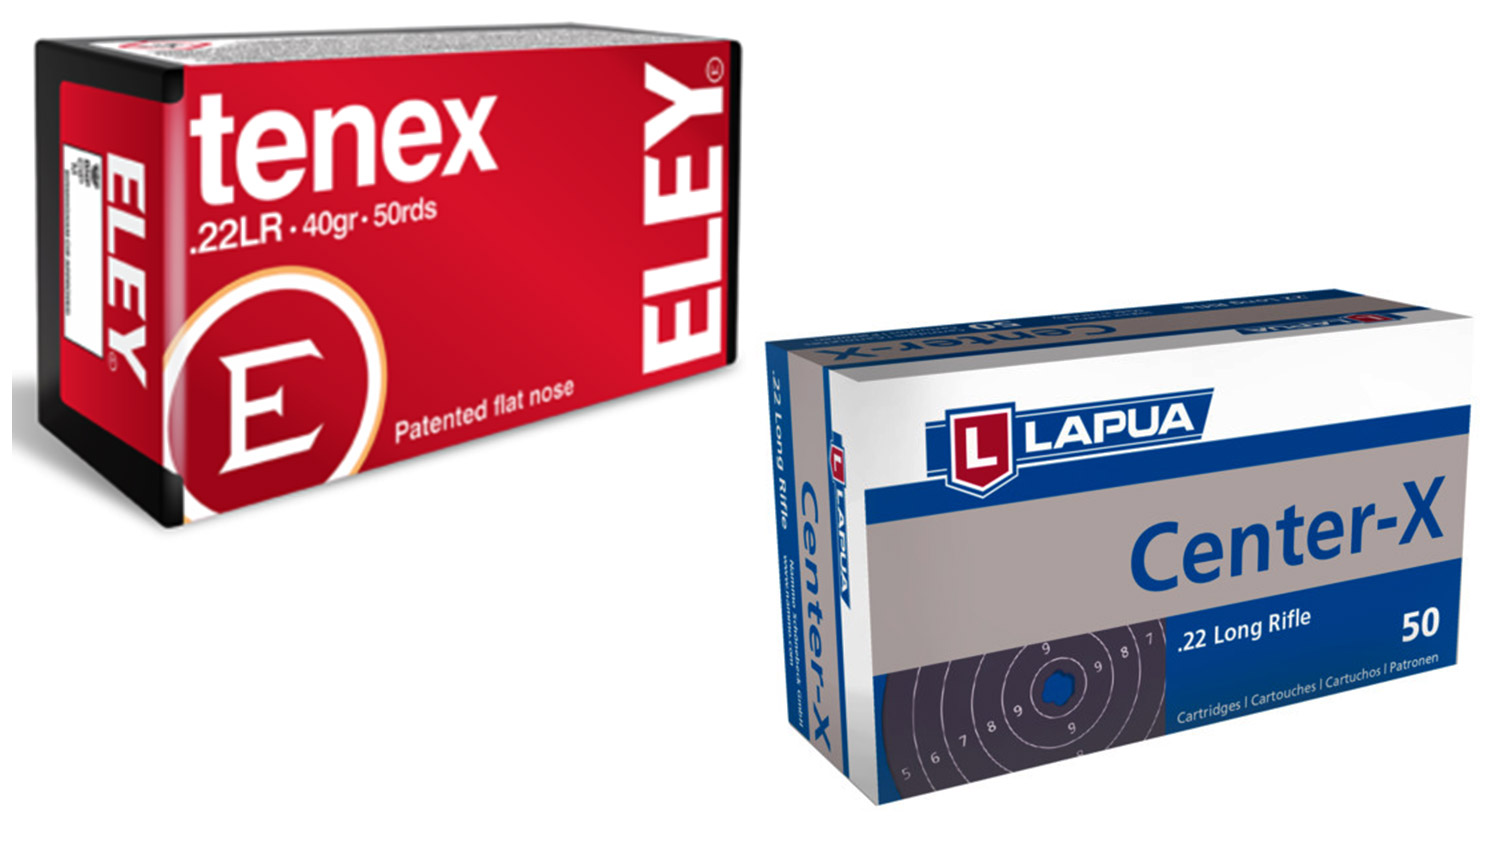 Eley tenex and Lapua Center-X